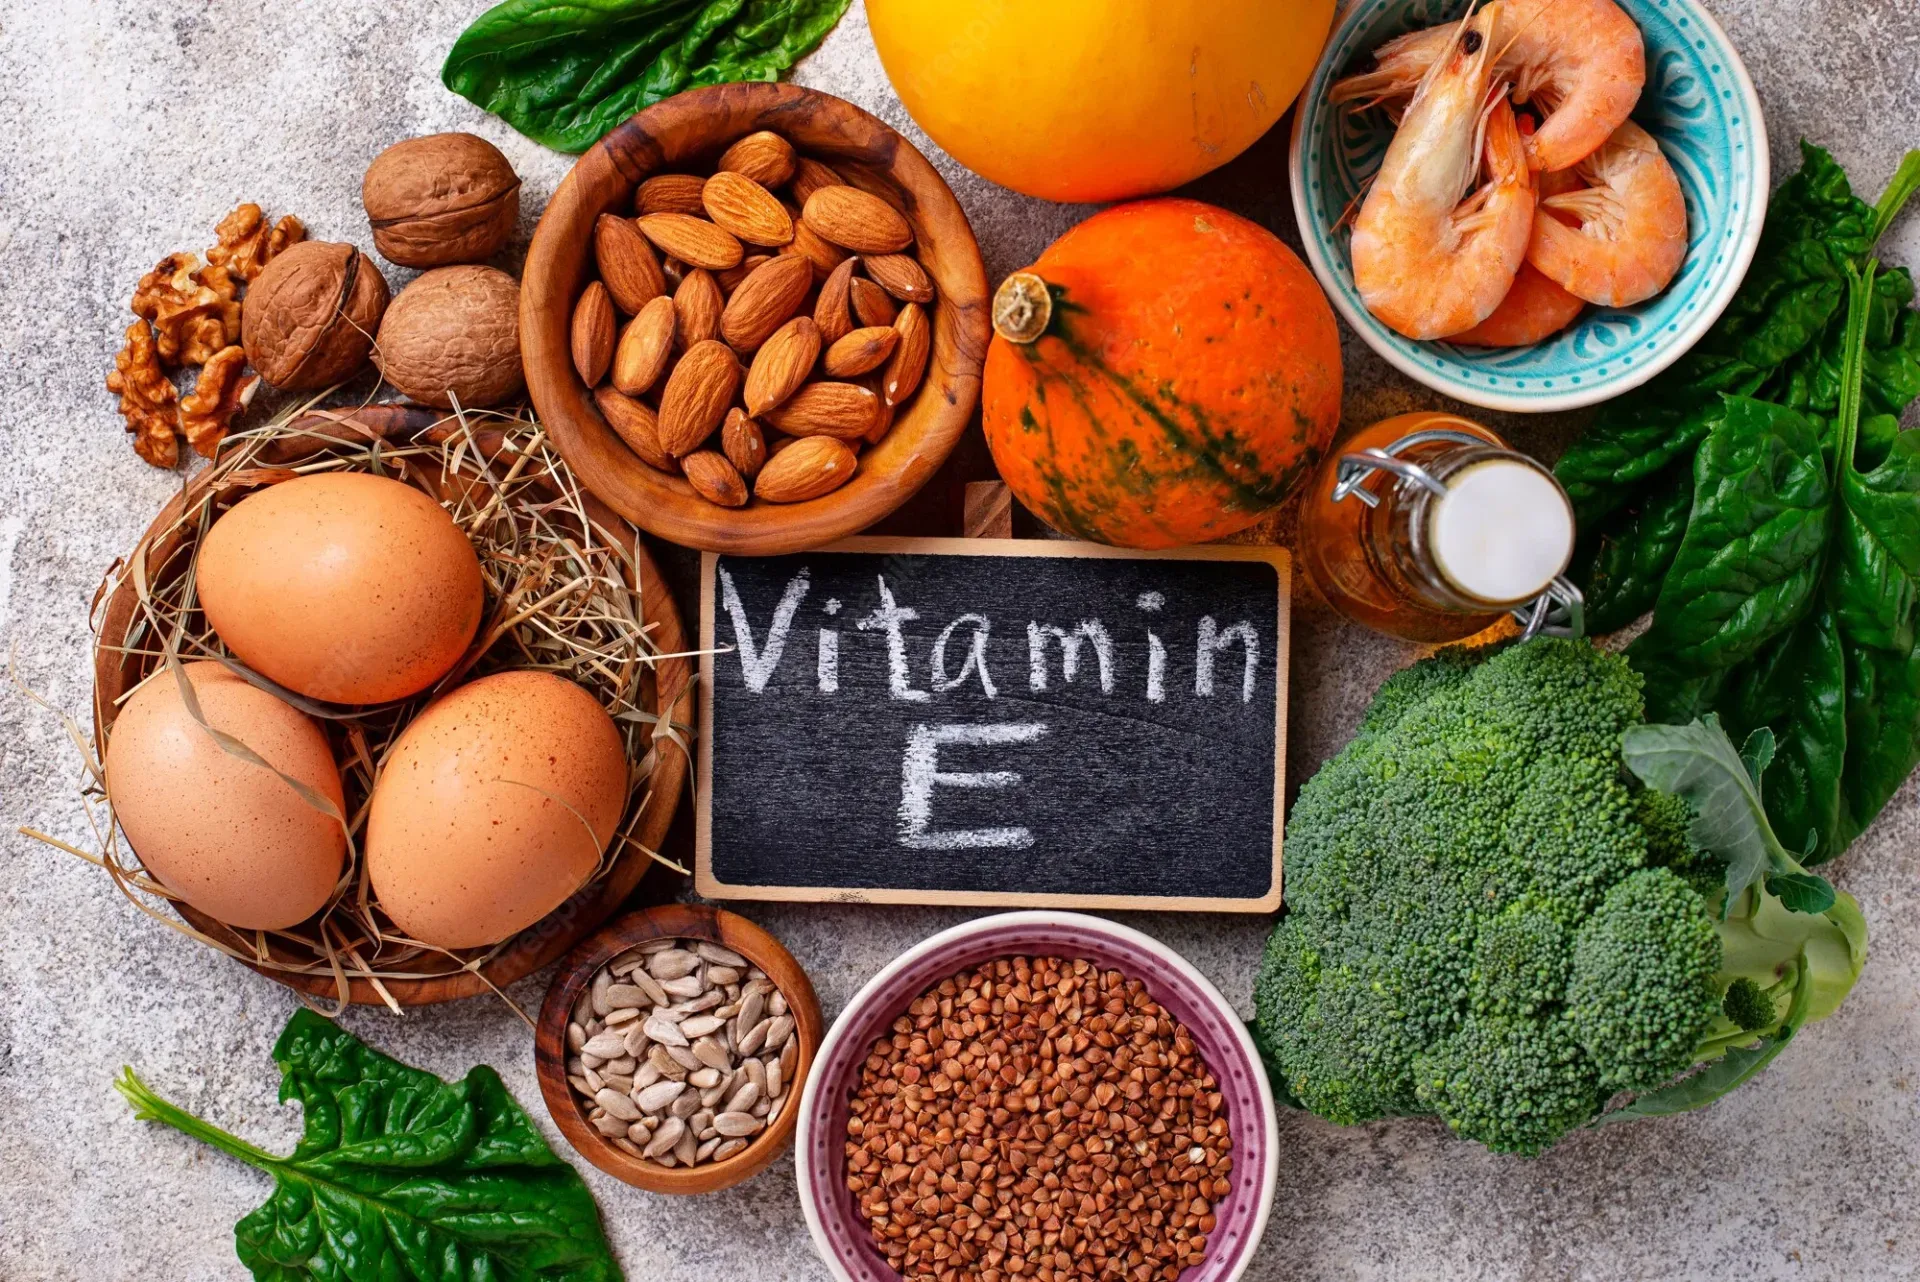 cach bo sung vitamin e 1 jpg webp Vitamin E là gì? 2 cách bổ sung vitamin E hiệu quả